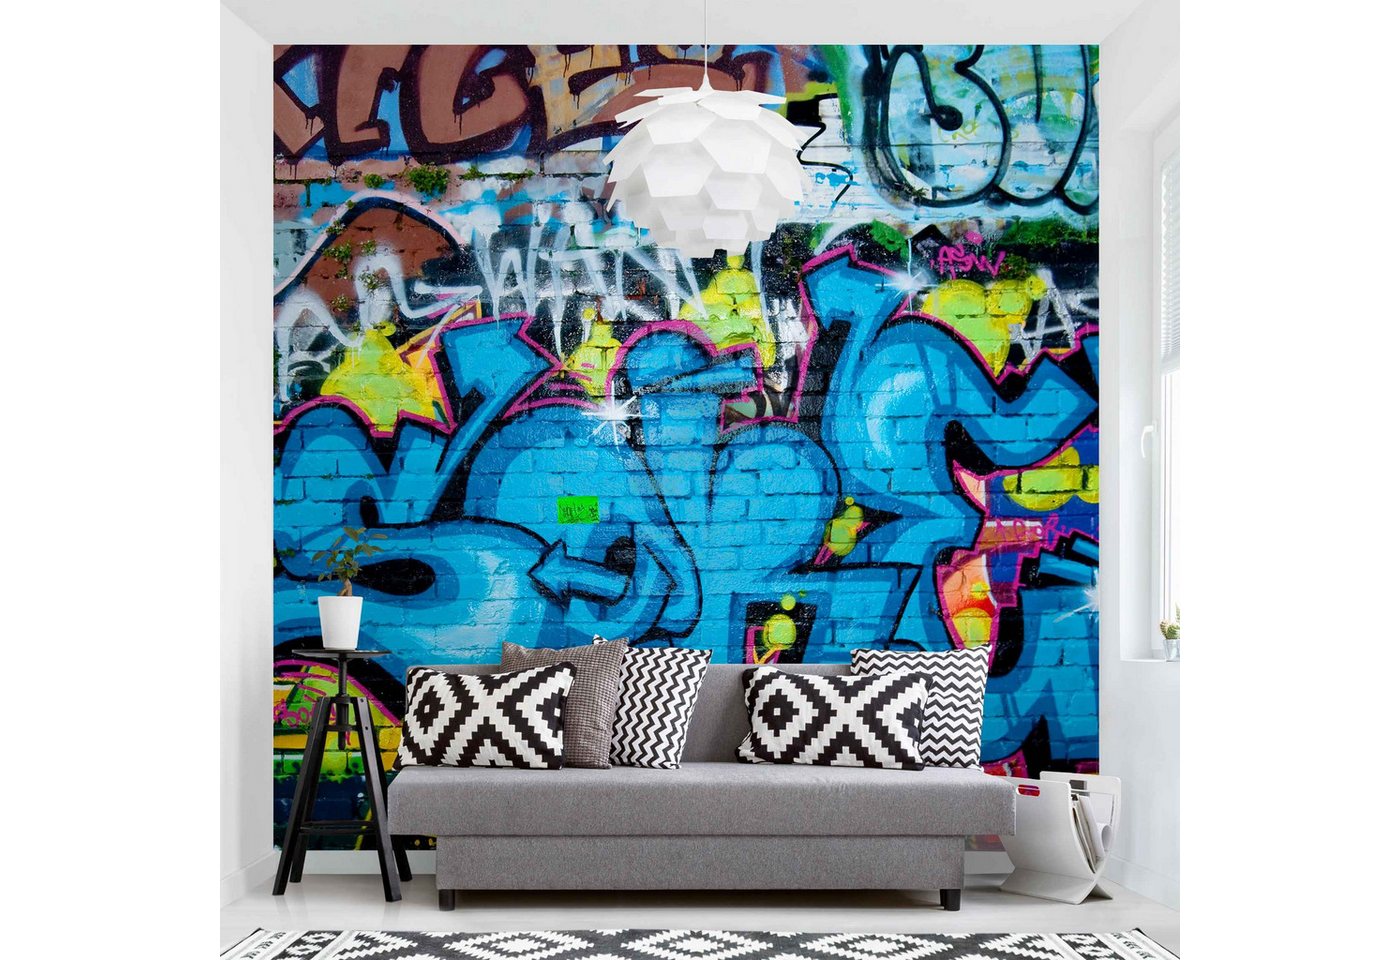 Bilderdepot24 Mustertapete Graffiti Optik Graffitiwand Backstein Ziegel Modern Street Art, Glatt, Matt, (Inklusive Gratis-Kleister oder selbstklebend), Jugendzimmer Flur Büro Wohnzimmer Fototapete Vliestapete Wandtapete von Bilderdepot24